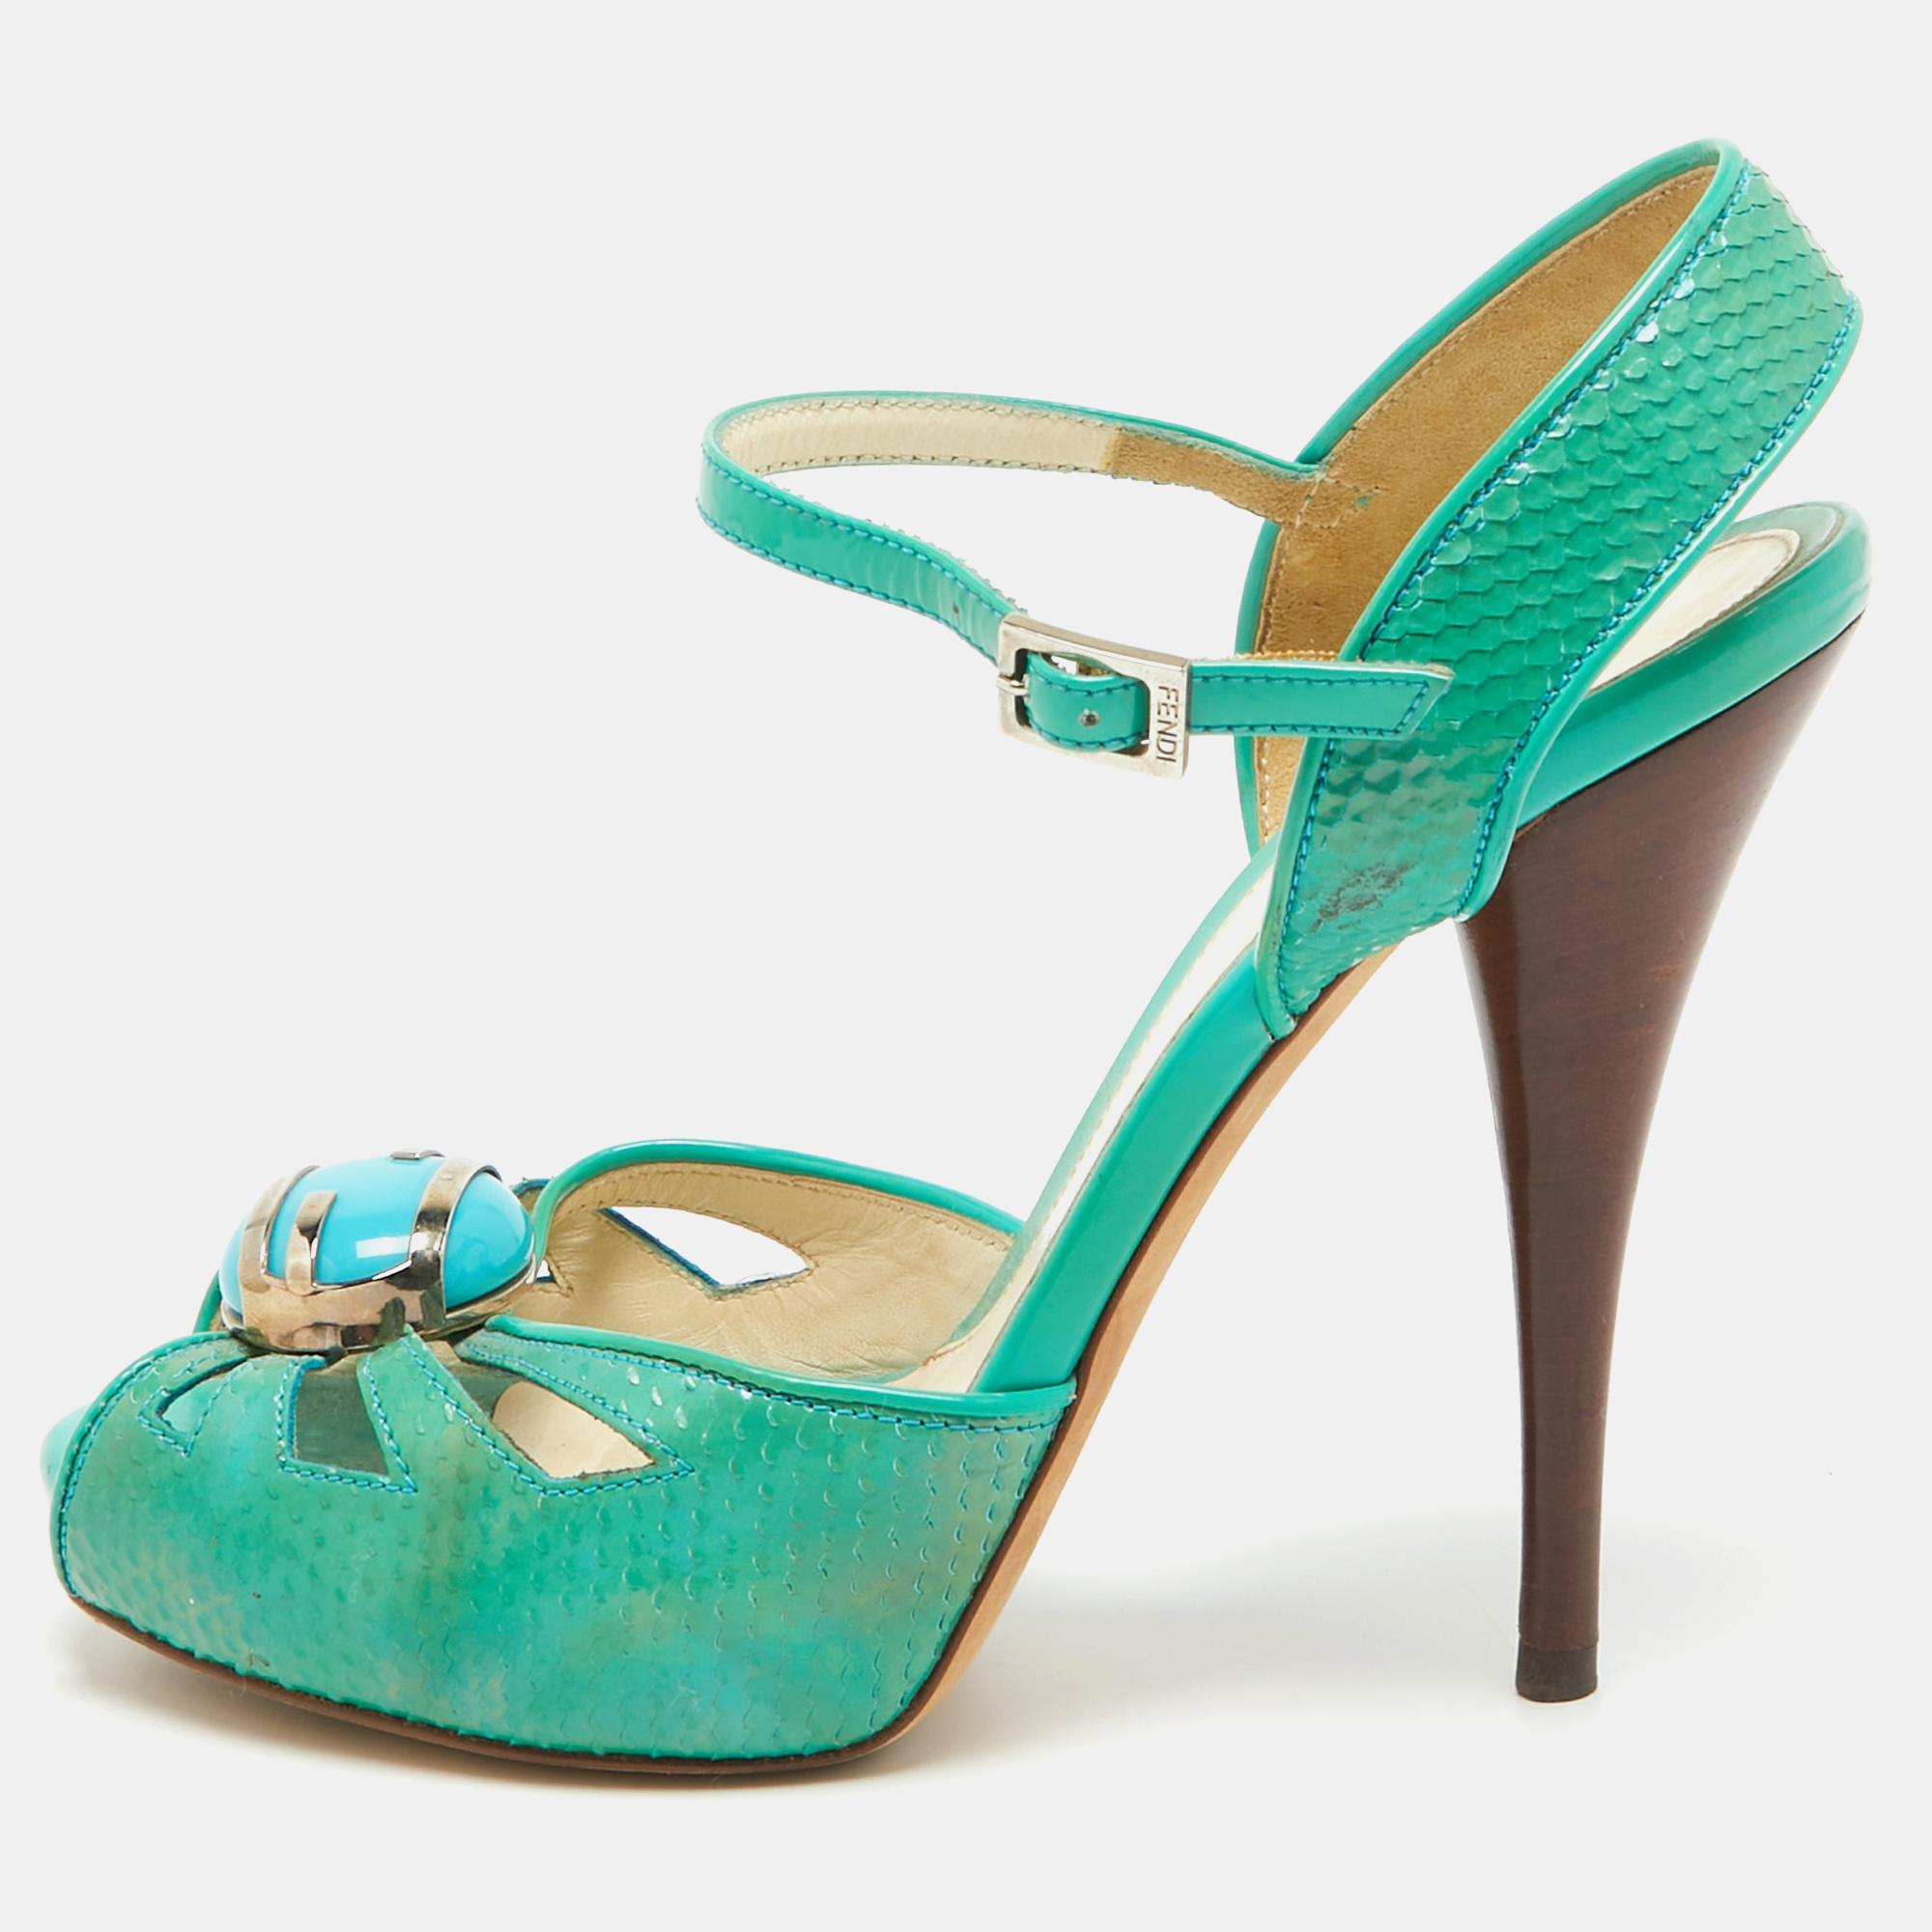 Fendi turquoise snake embossed slingback platform sandals size 37